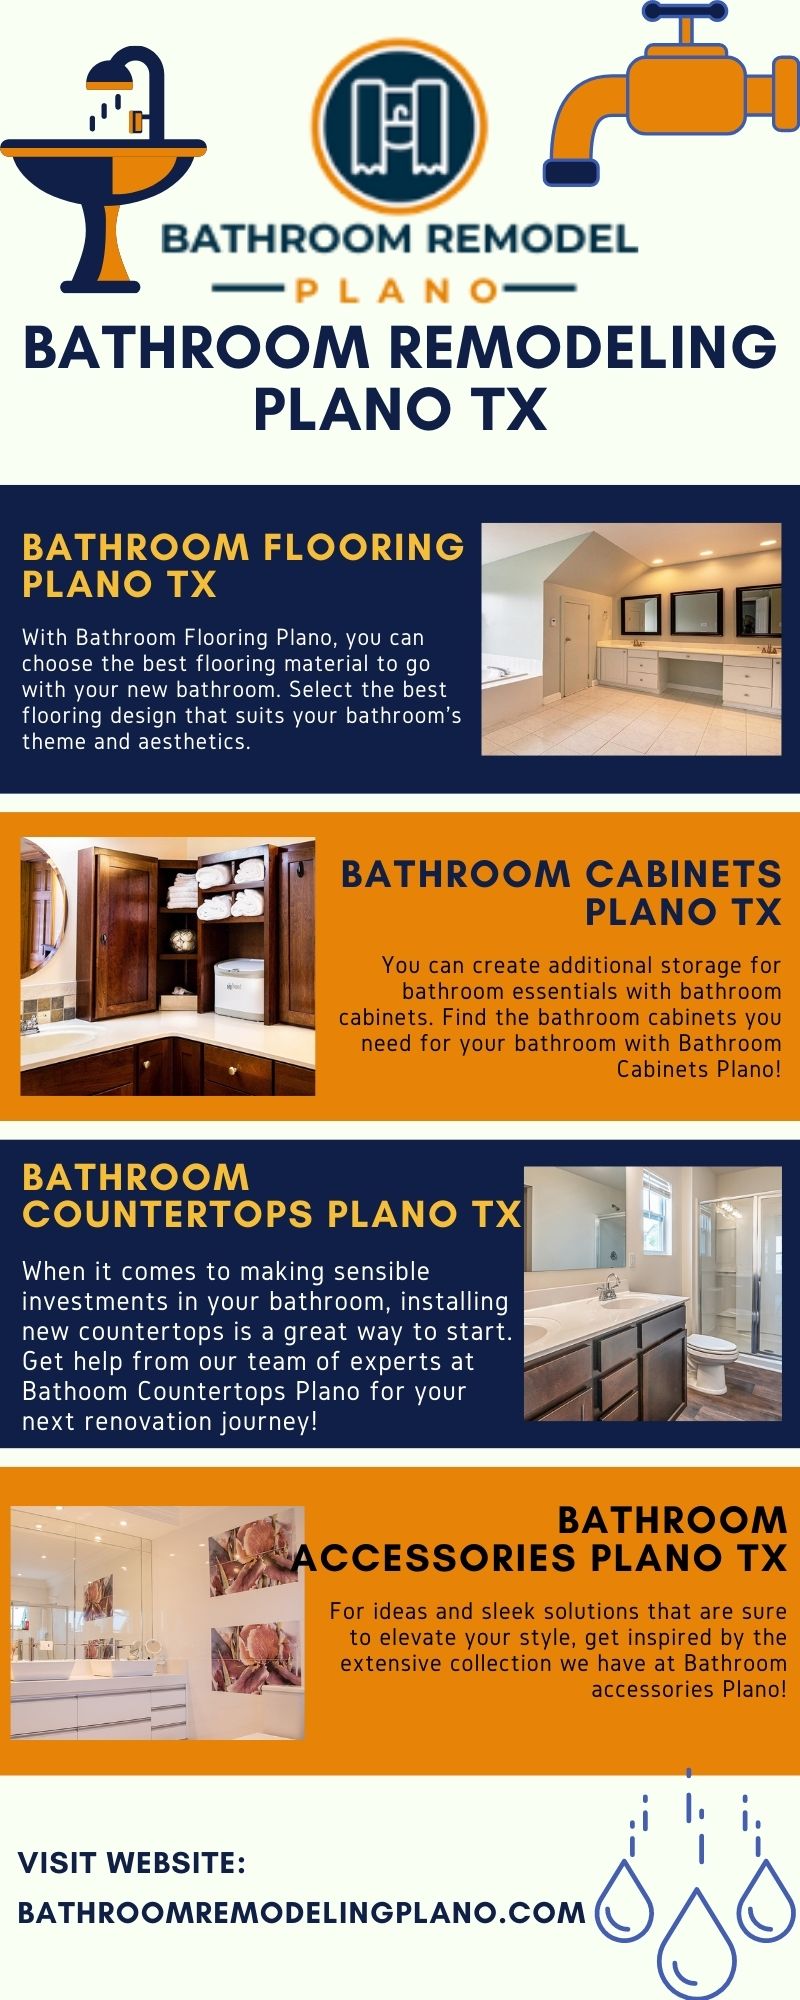 Bathroom Remodeling Plano TX